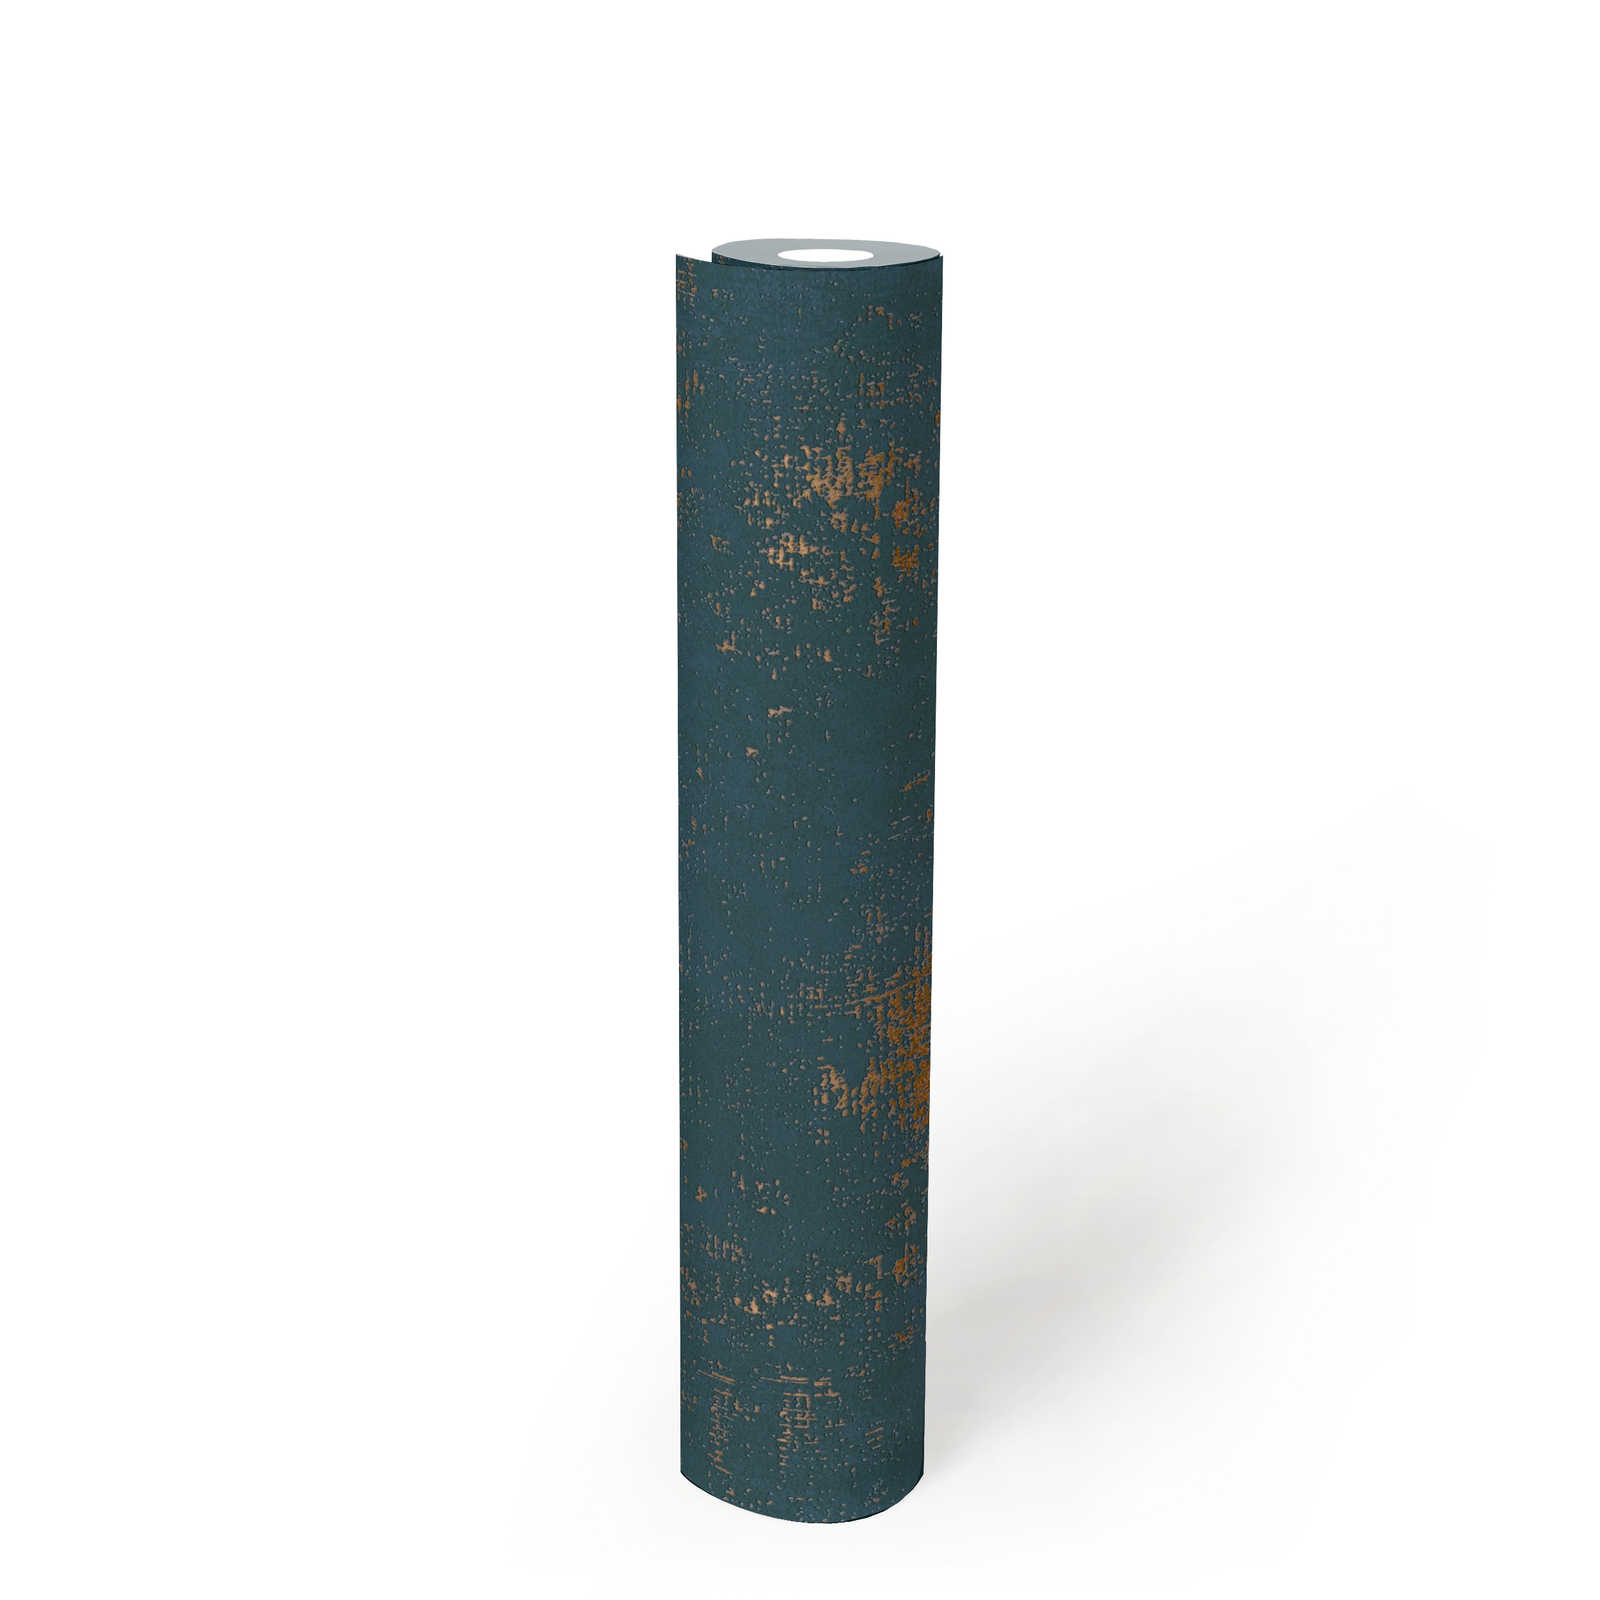             Papel pintado azul con acento metálico dorado y detalles de textura
        